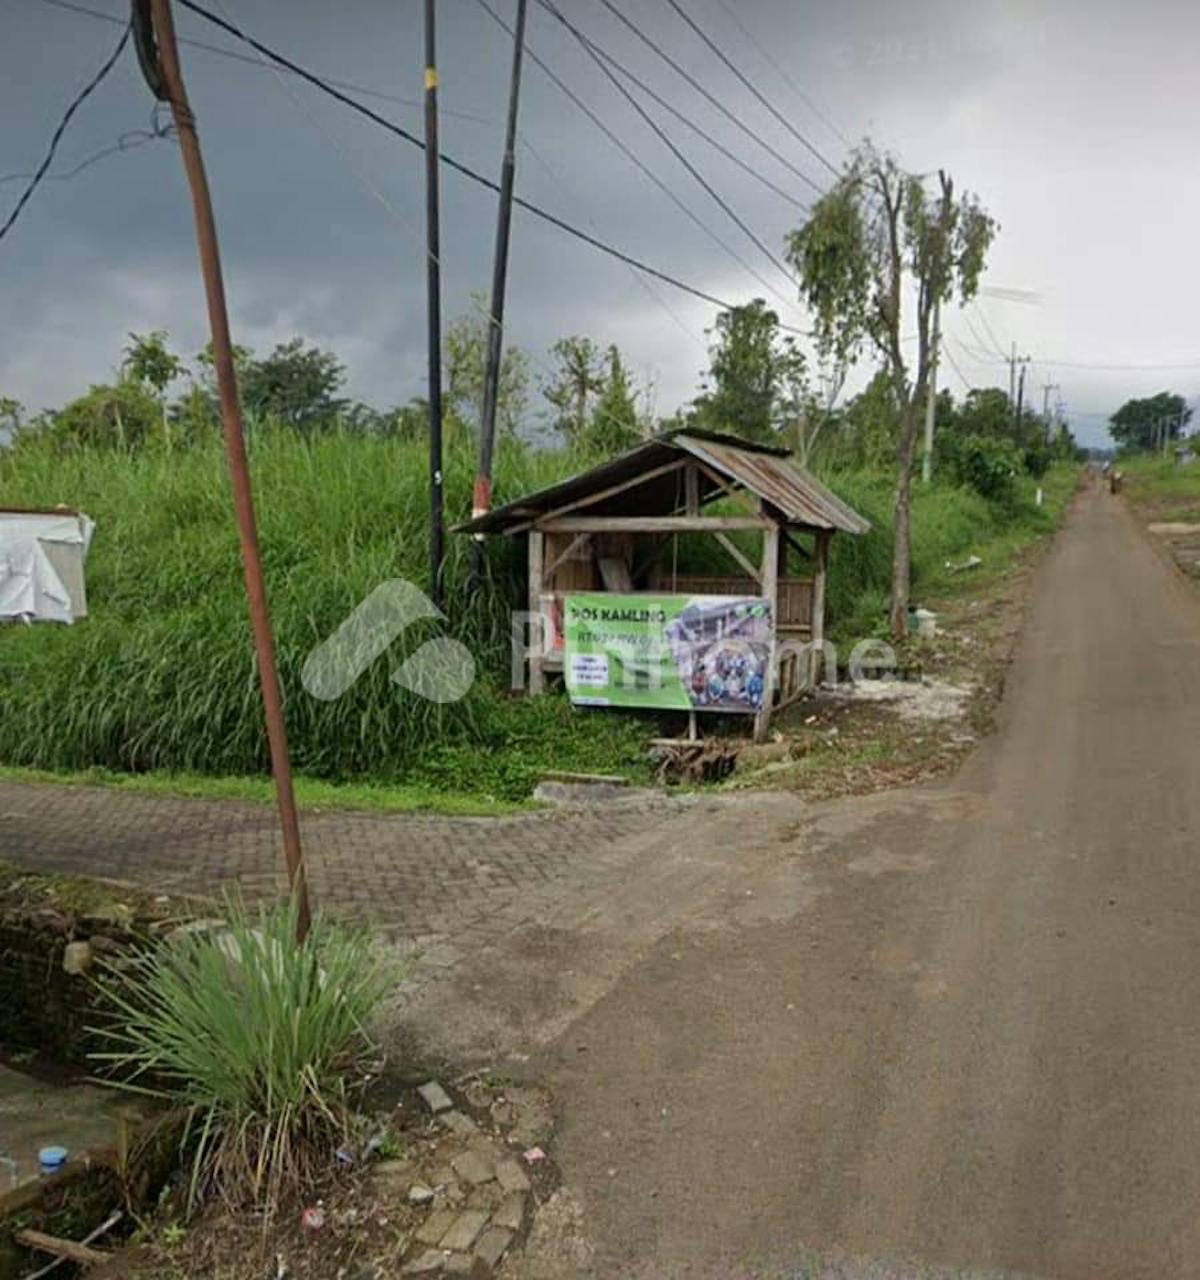 Dijual Tanah Komersial Lokasi Bagus di Jl. Locari, Precet, Sumbersekar, Kec. Dau, Kabupaten Malang, Jawa Timur 65151 - Gambar 1